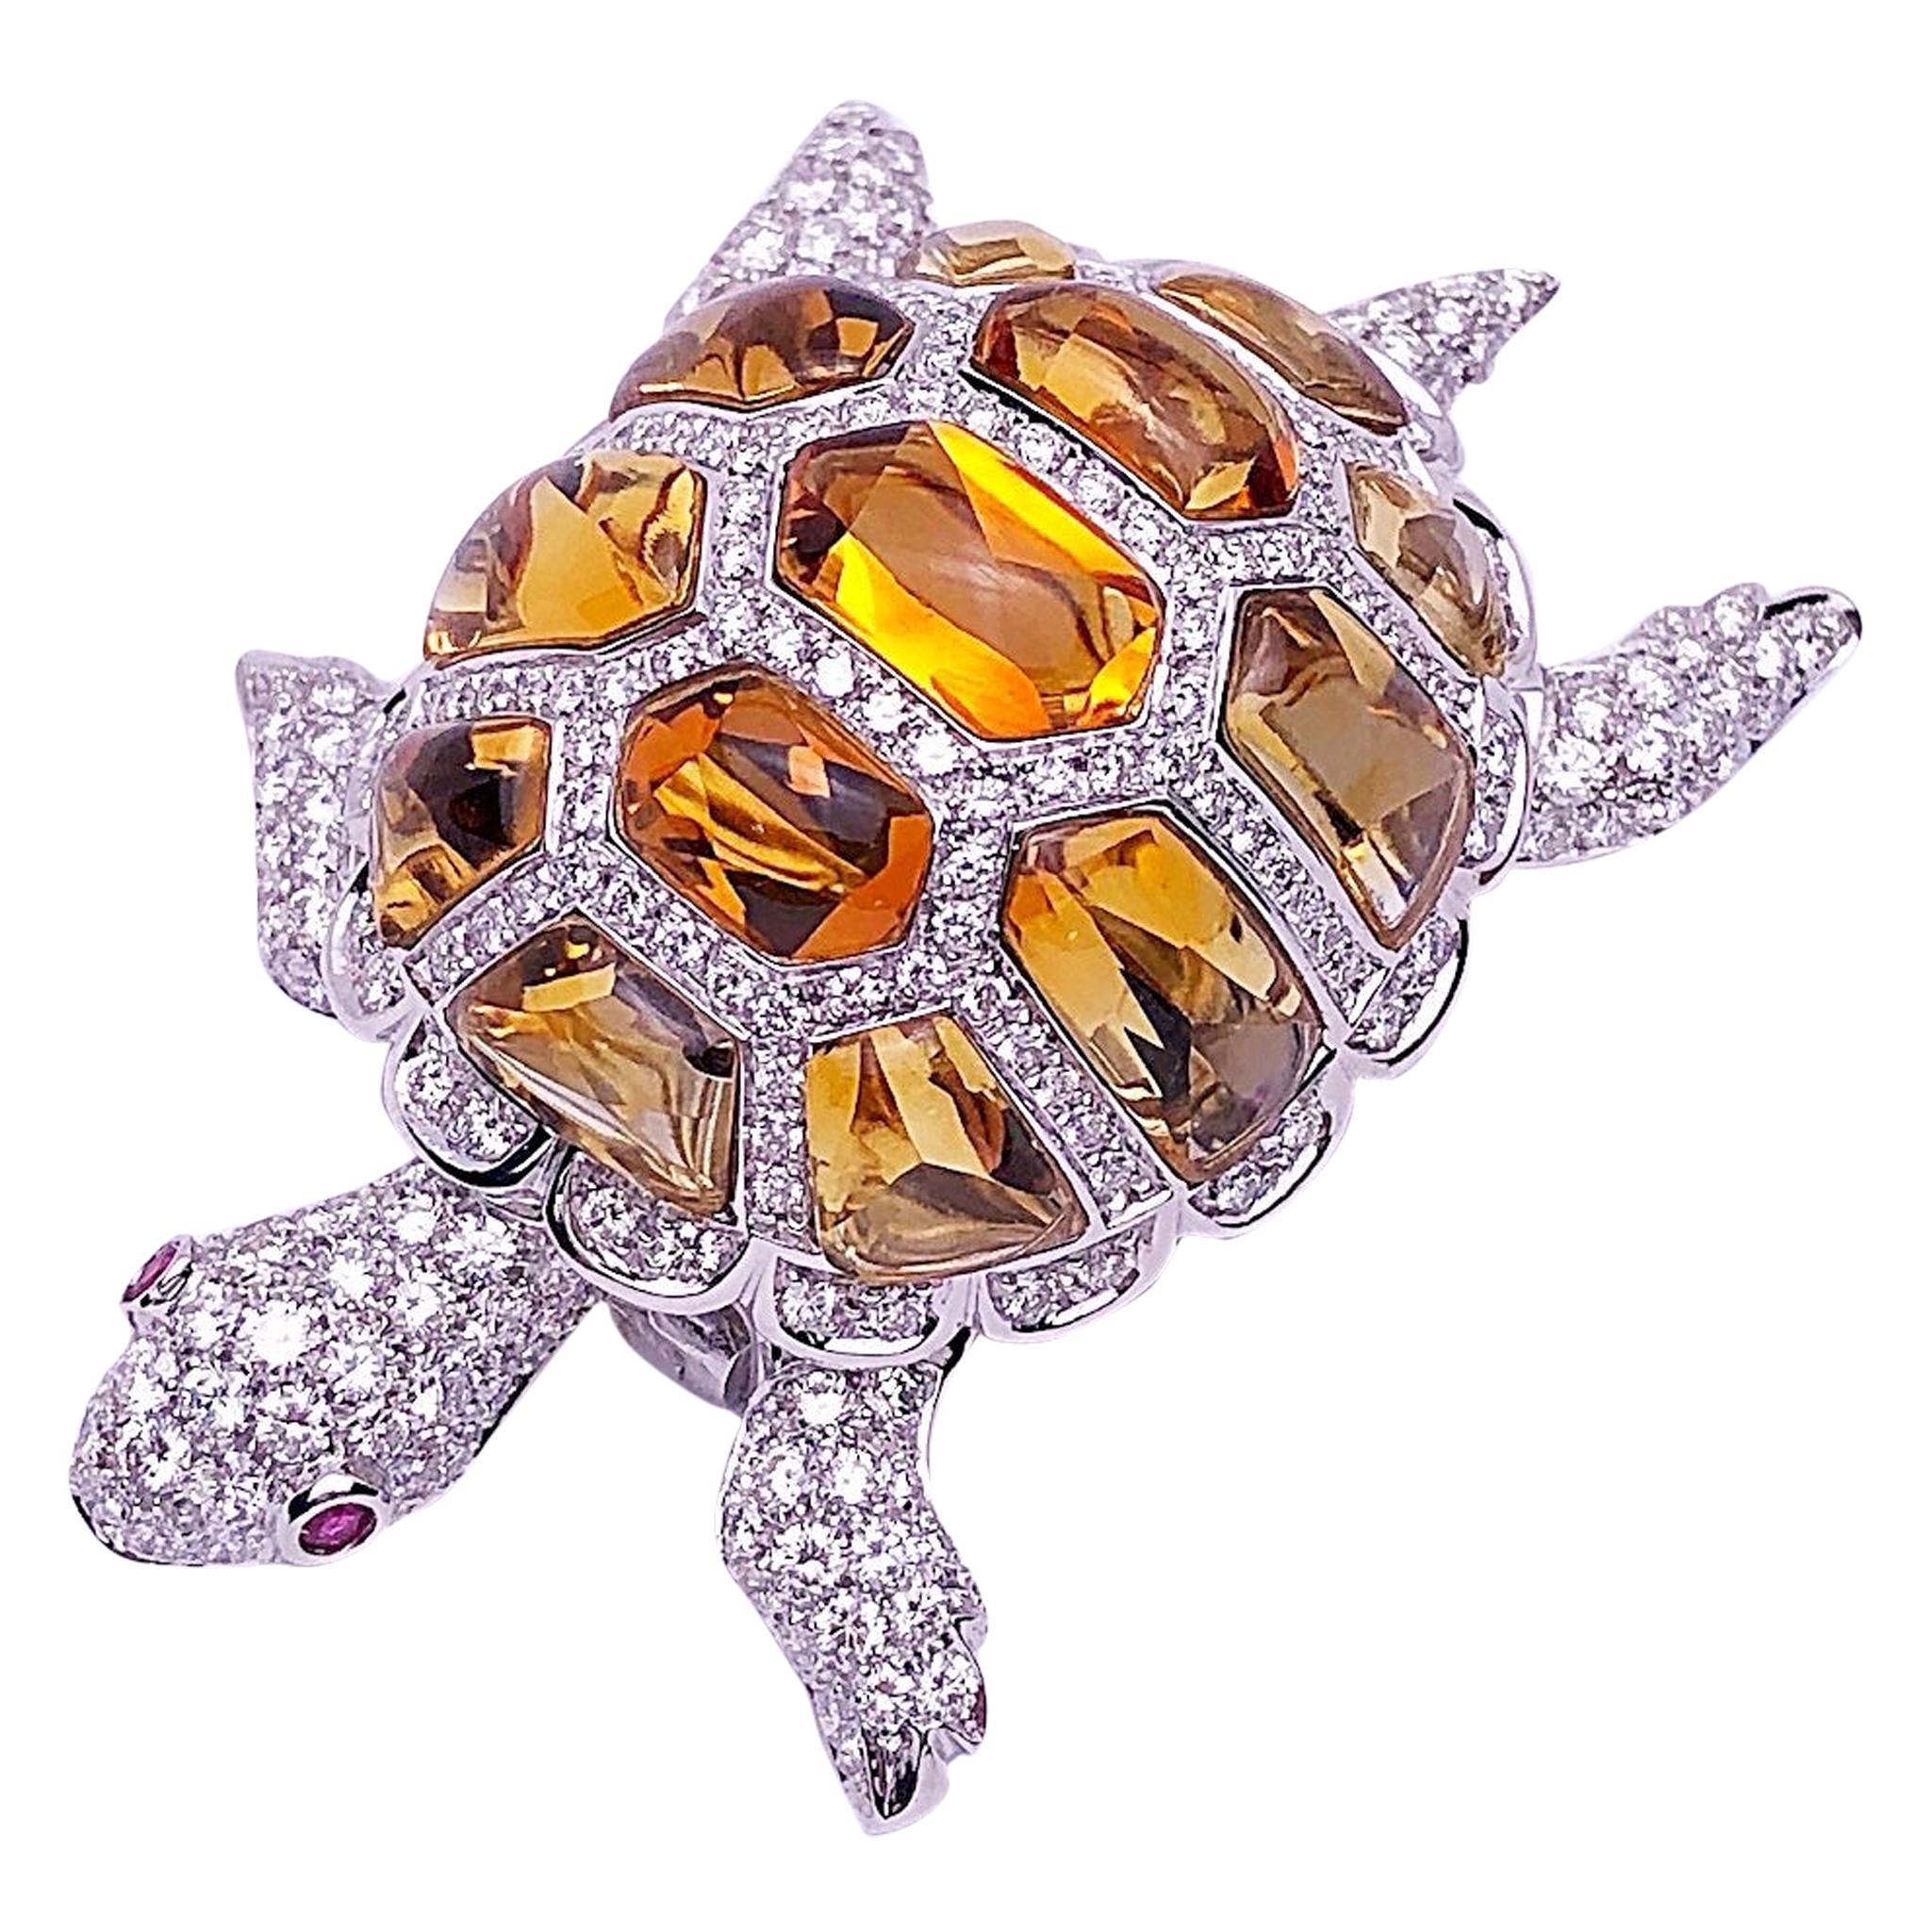 Garavelli 18 Karat White Gold, 4.58 Carat Diamond Turtle Brooch with Citrines For Sale